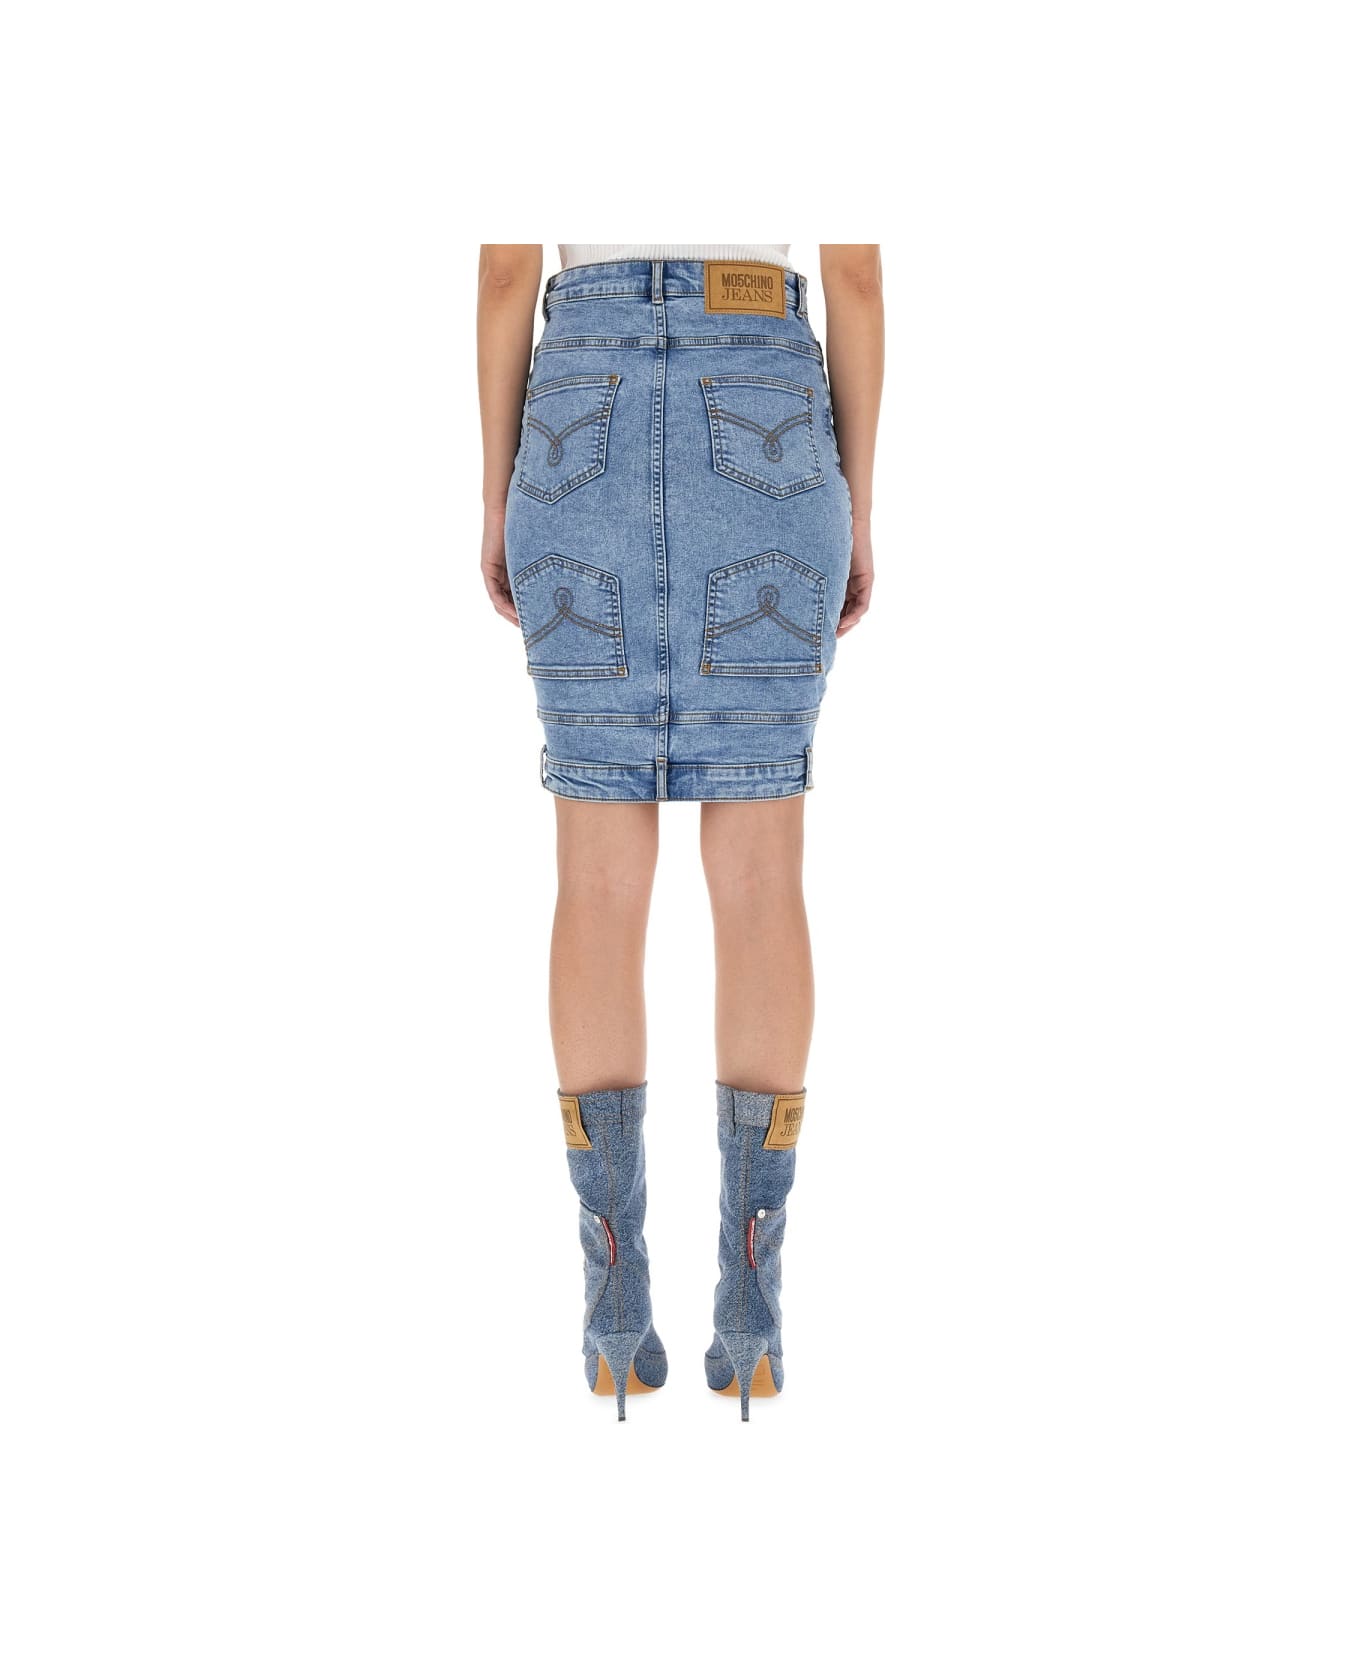 M05CH1N0 Jeans Denim Skirt - BLUE スカート